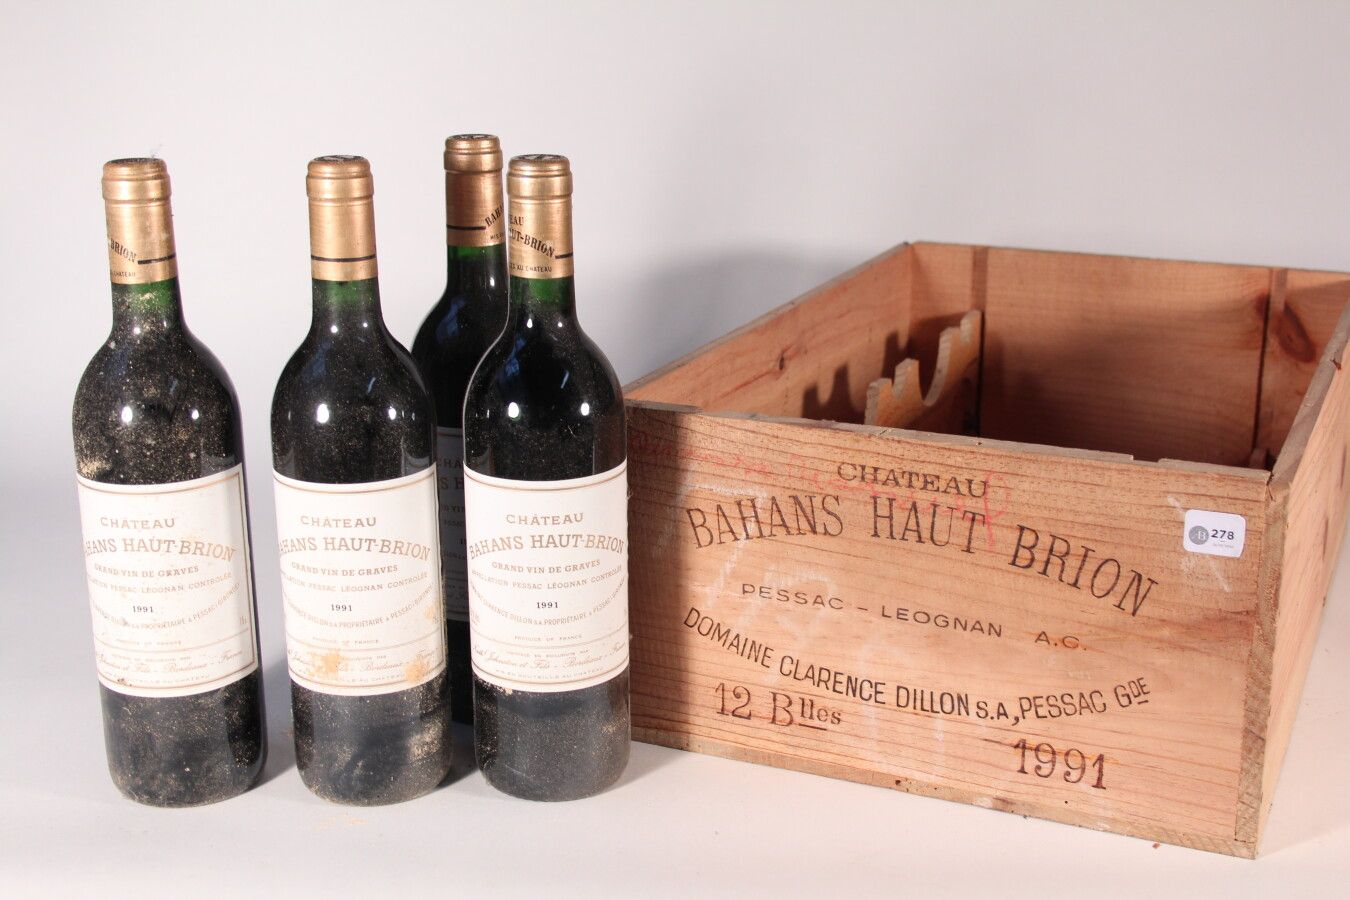 Null 1991 - Bahans Haut Brion

Pessac-Léognan Red - 6 bottles